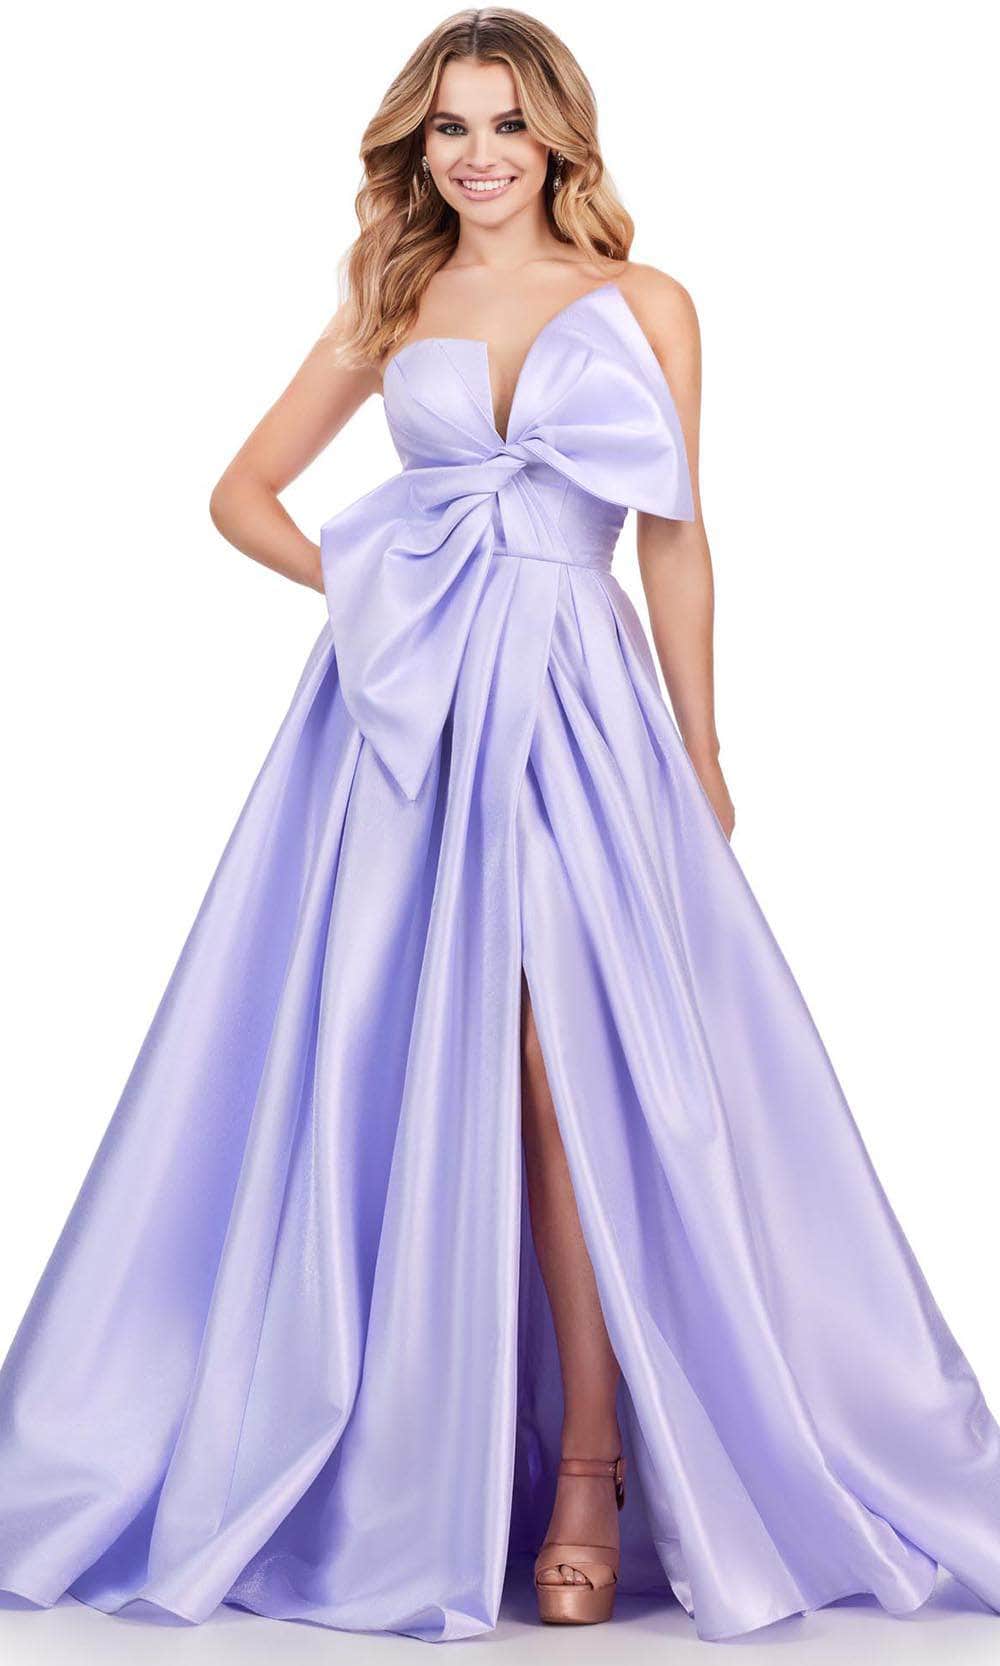 Image of Ashley Lauren 11609 - V-Neck Oversized Bow Prom Ballgown